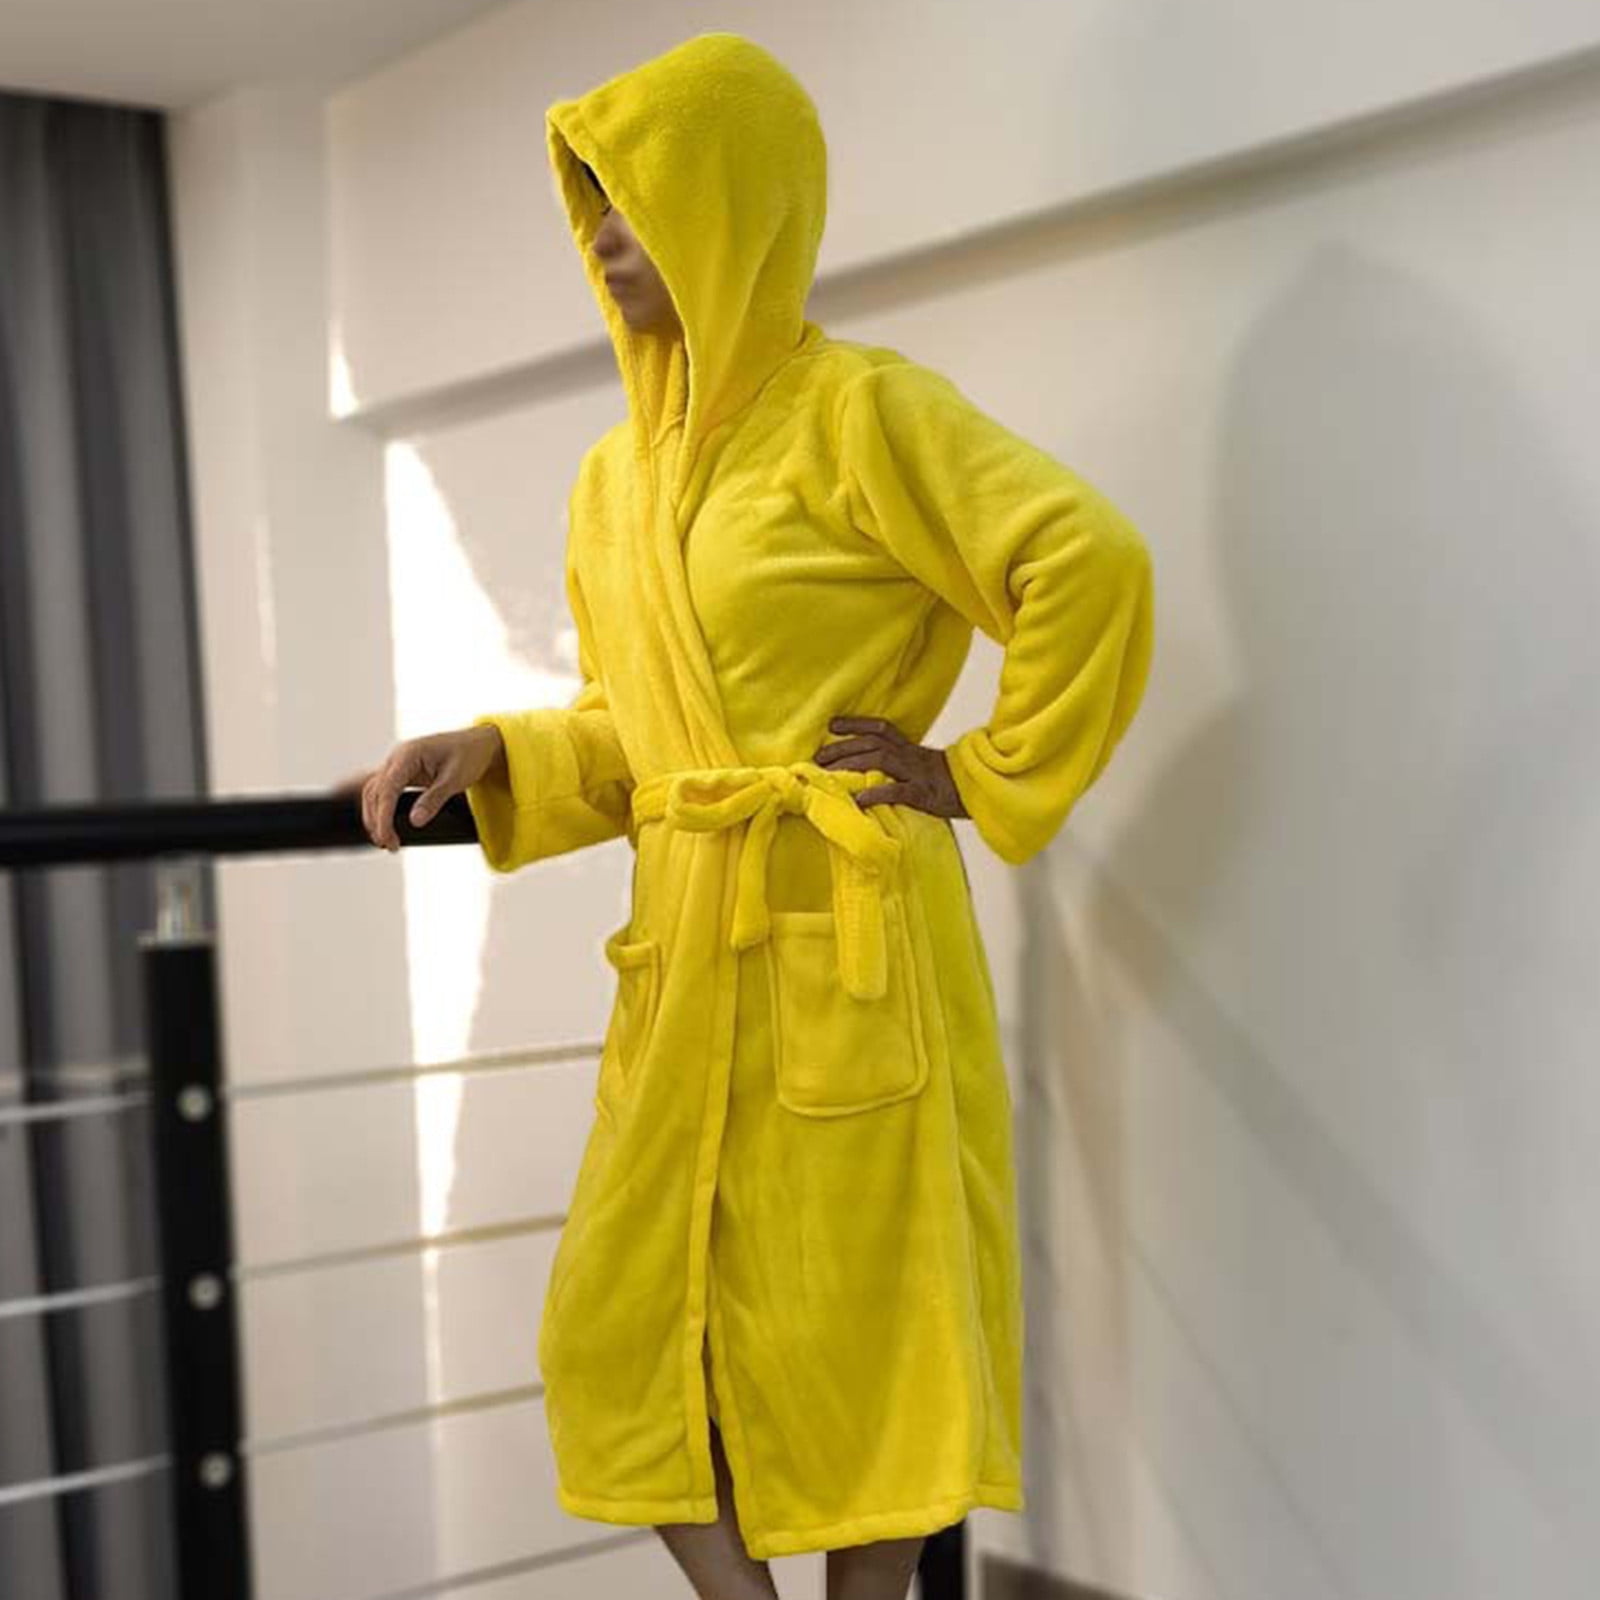 ENYOFE Mens Bathrobe Long Terry Cloth Robes Hooded Cotton Towel Bathrobe  for Spa Bath Loungewear at  Men's Clothing store